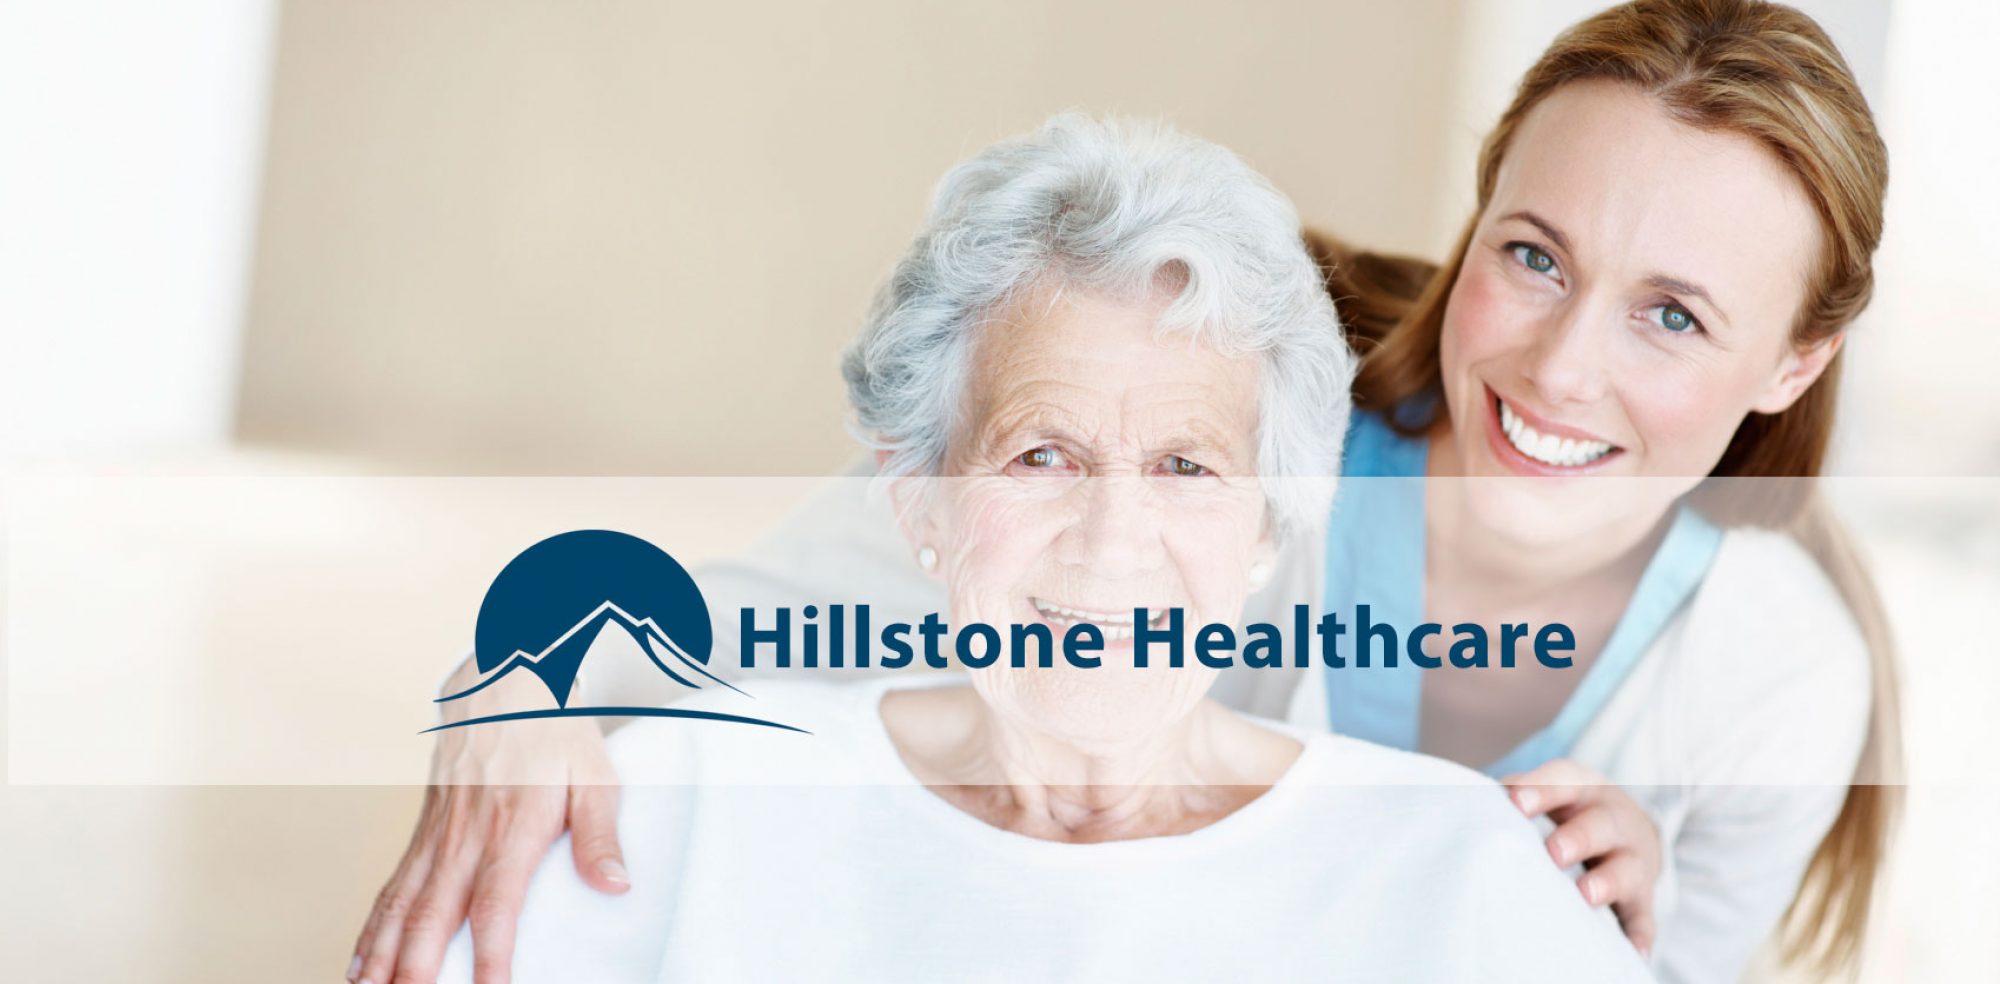 Hillstone Healthcare